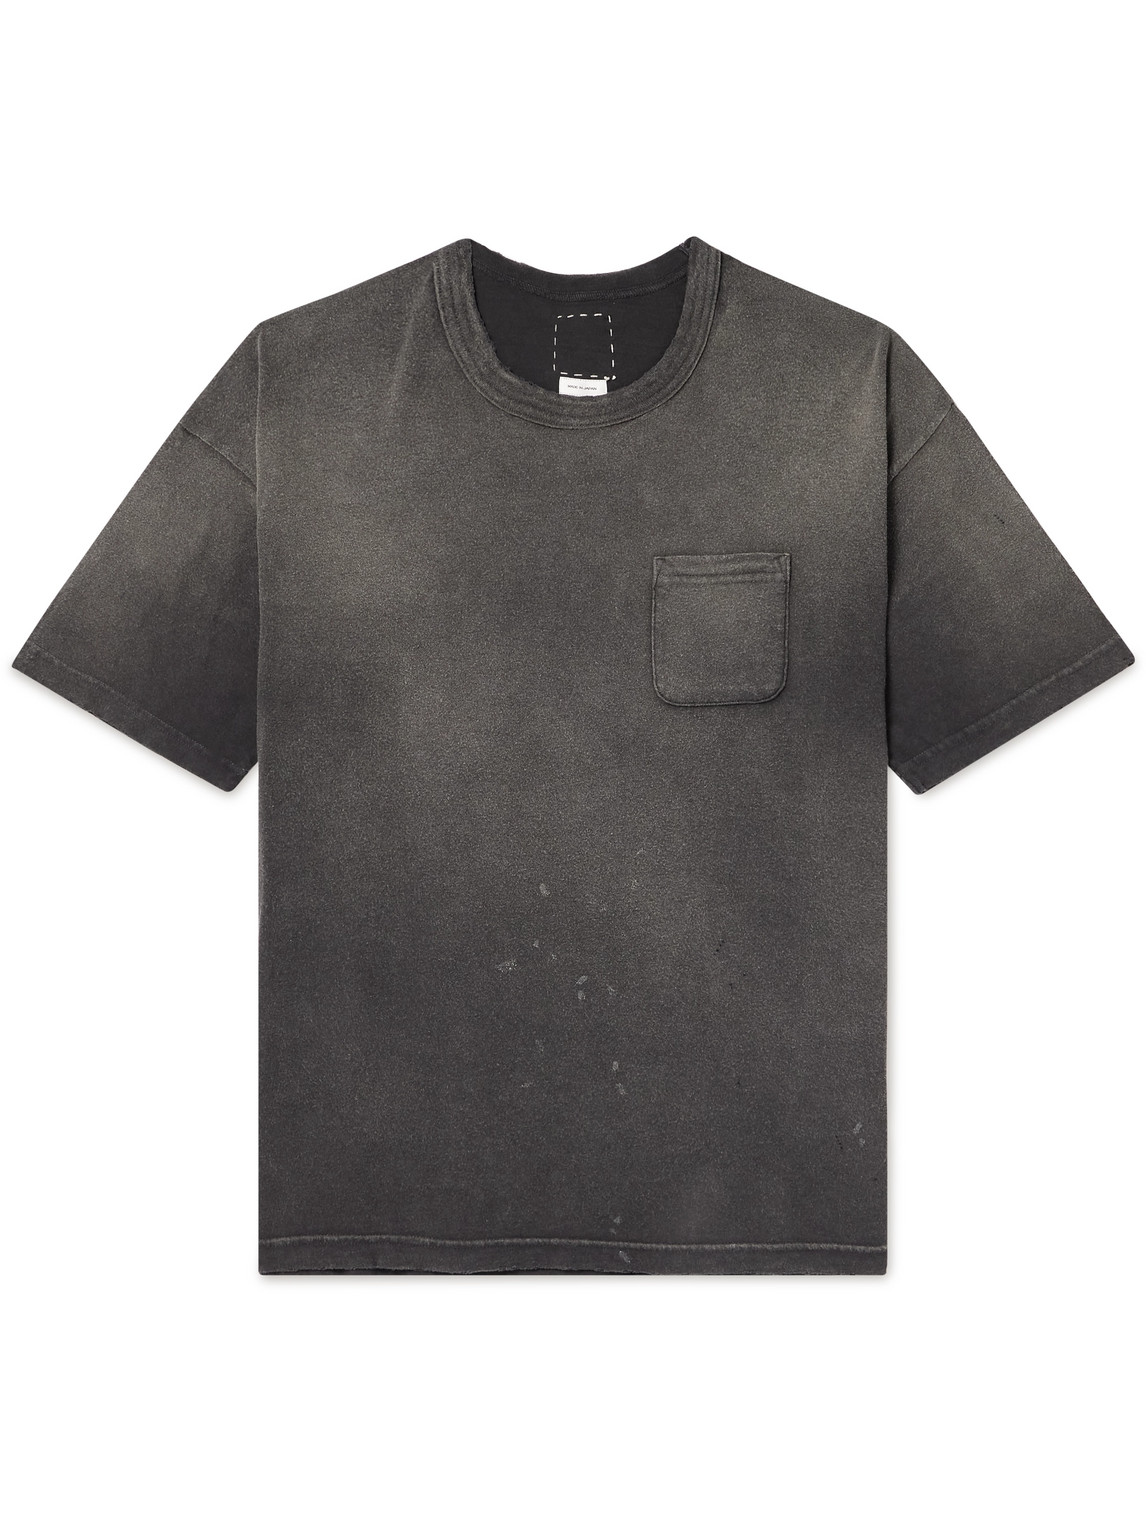 Jumbo Distressed Cotton-Jersey T-Shirt